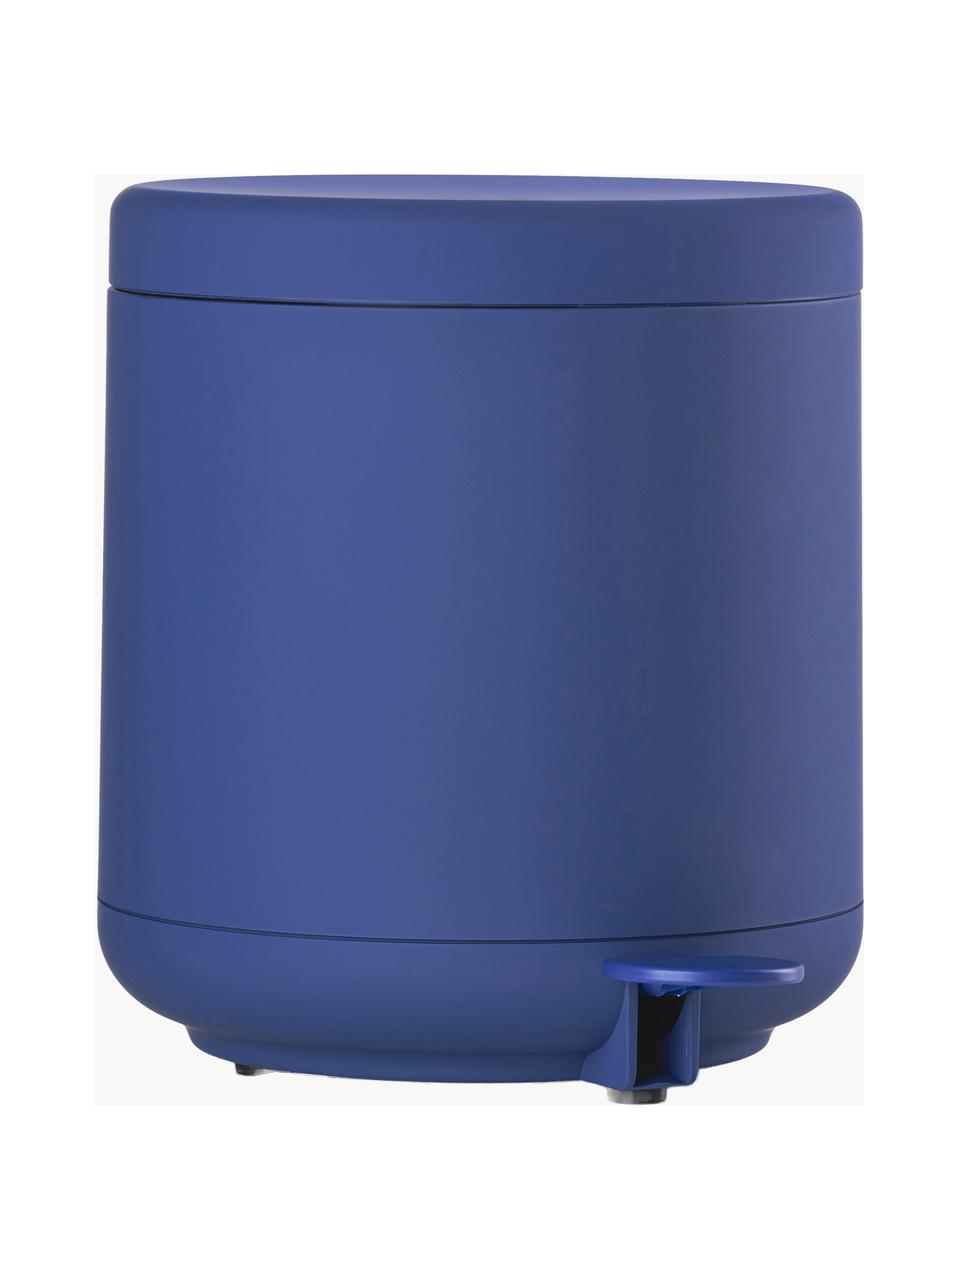 Abfalleimer Ume mit Pedal-Funktion, Kunststoff (ABS), Royalblau, 4 L